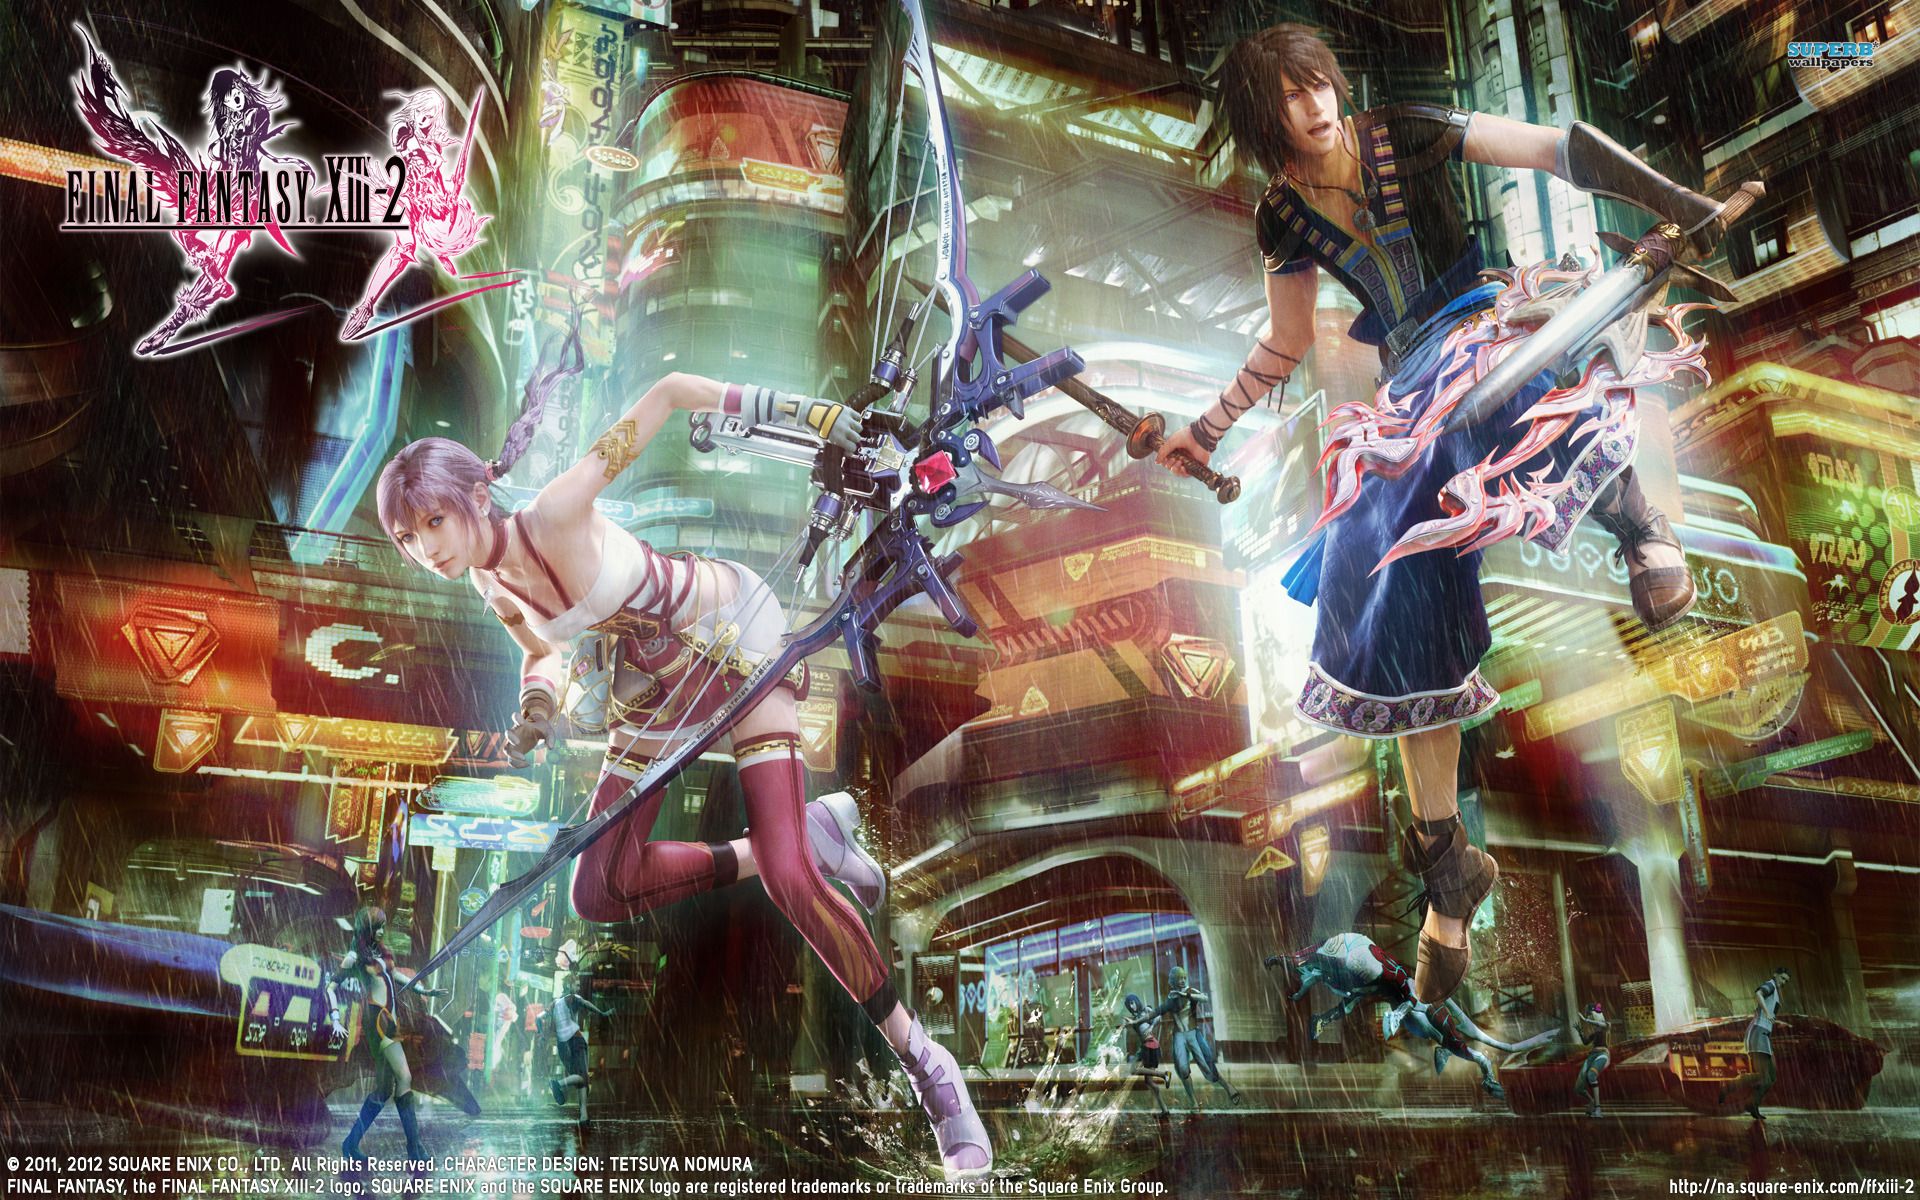 Serah And Noel Final Fantasy Xiii Wallpaper